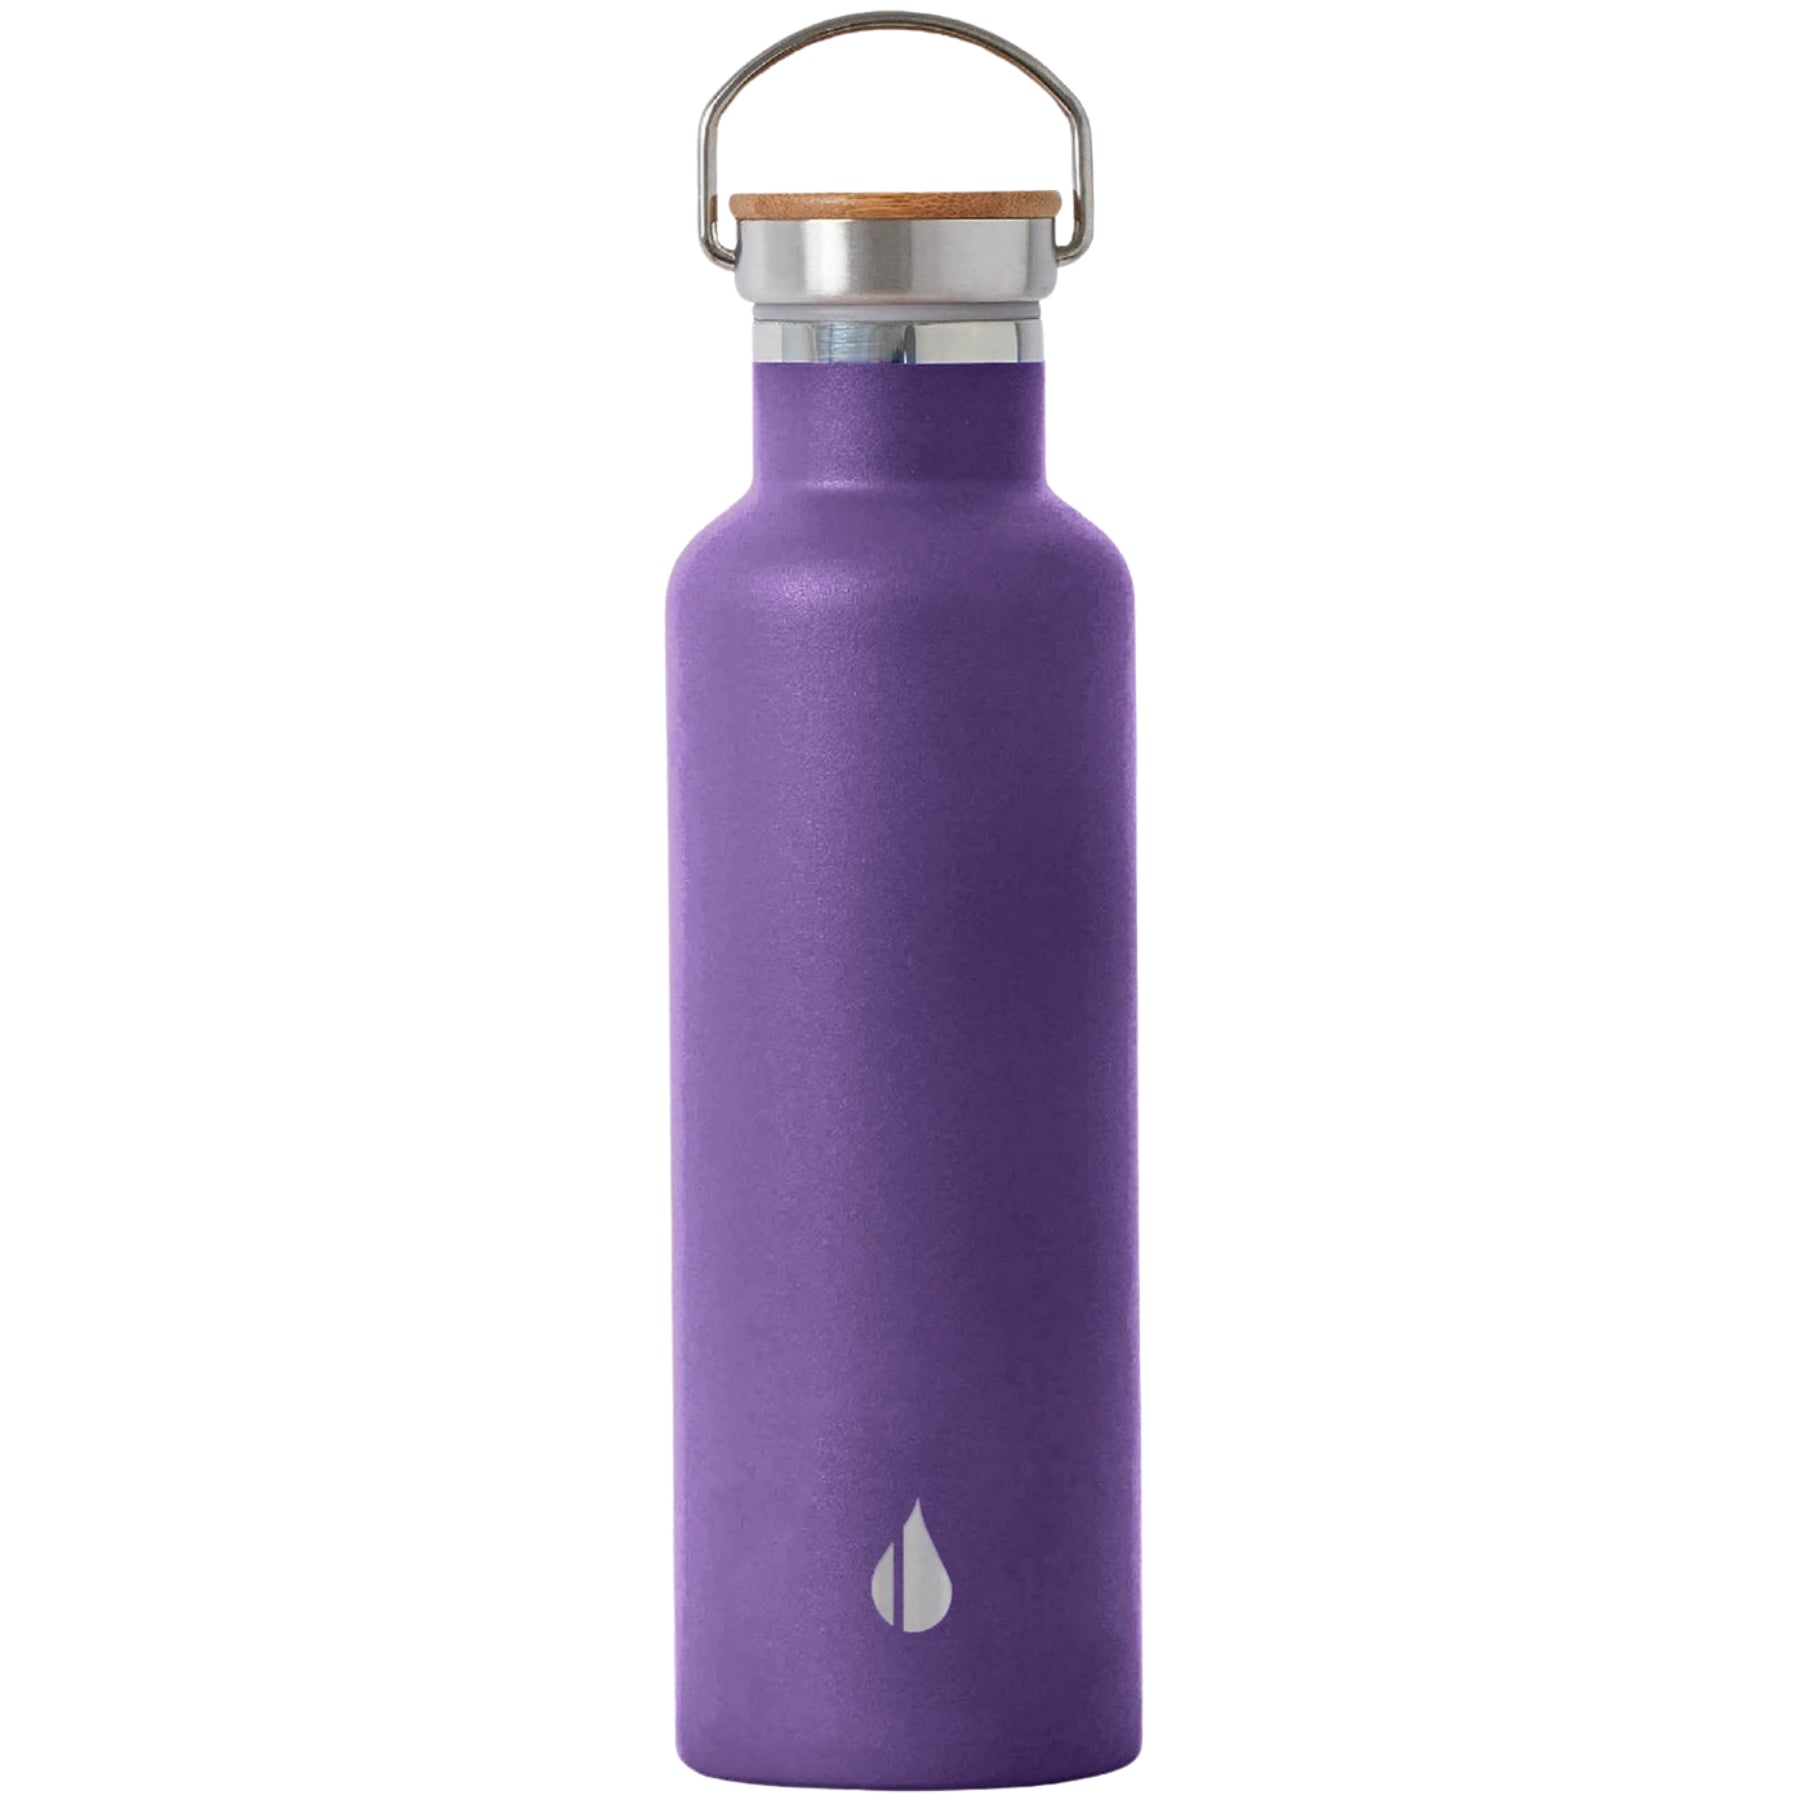 Customizable Elemental® 25 oz Stainless Steel Insulated Bottle in purple